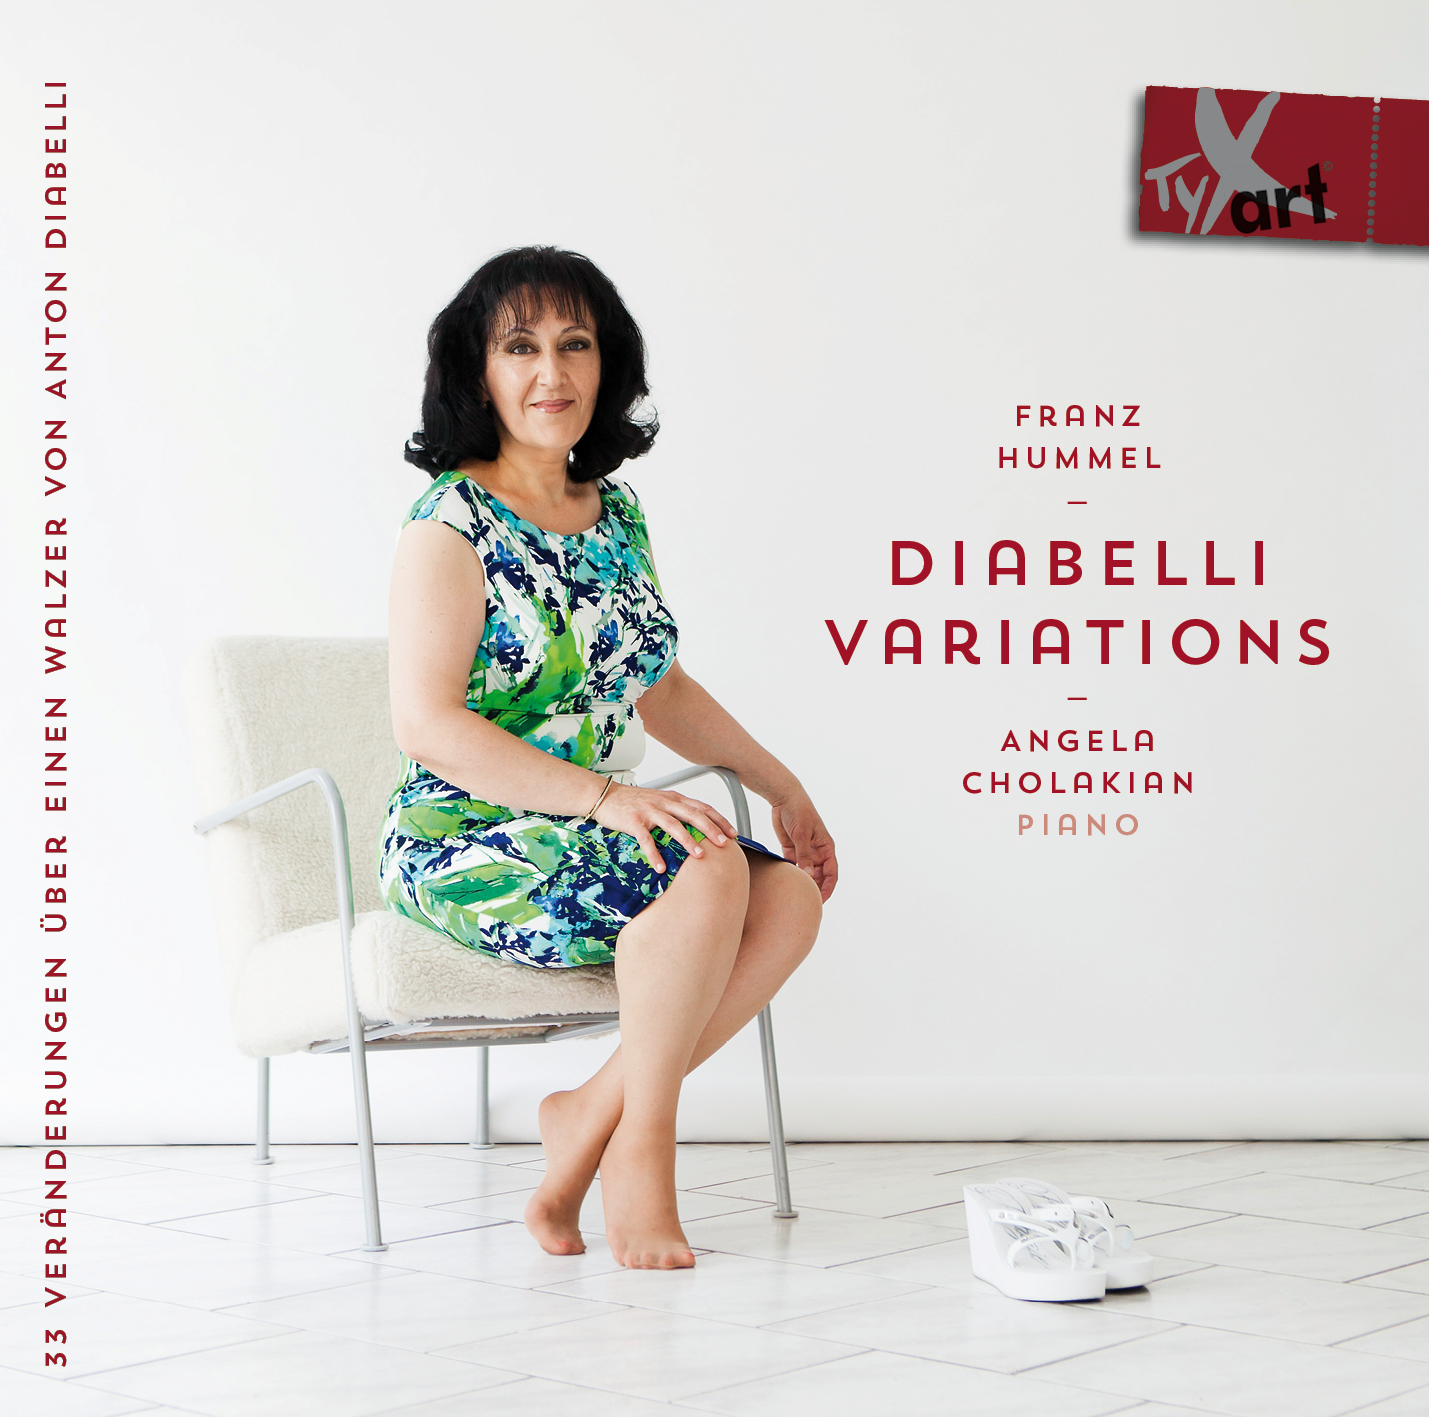 Angela Cholakian: Hummel Diabelli Variations